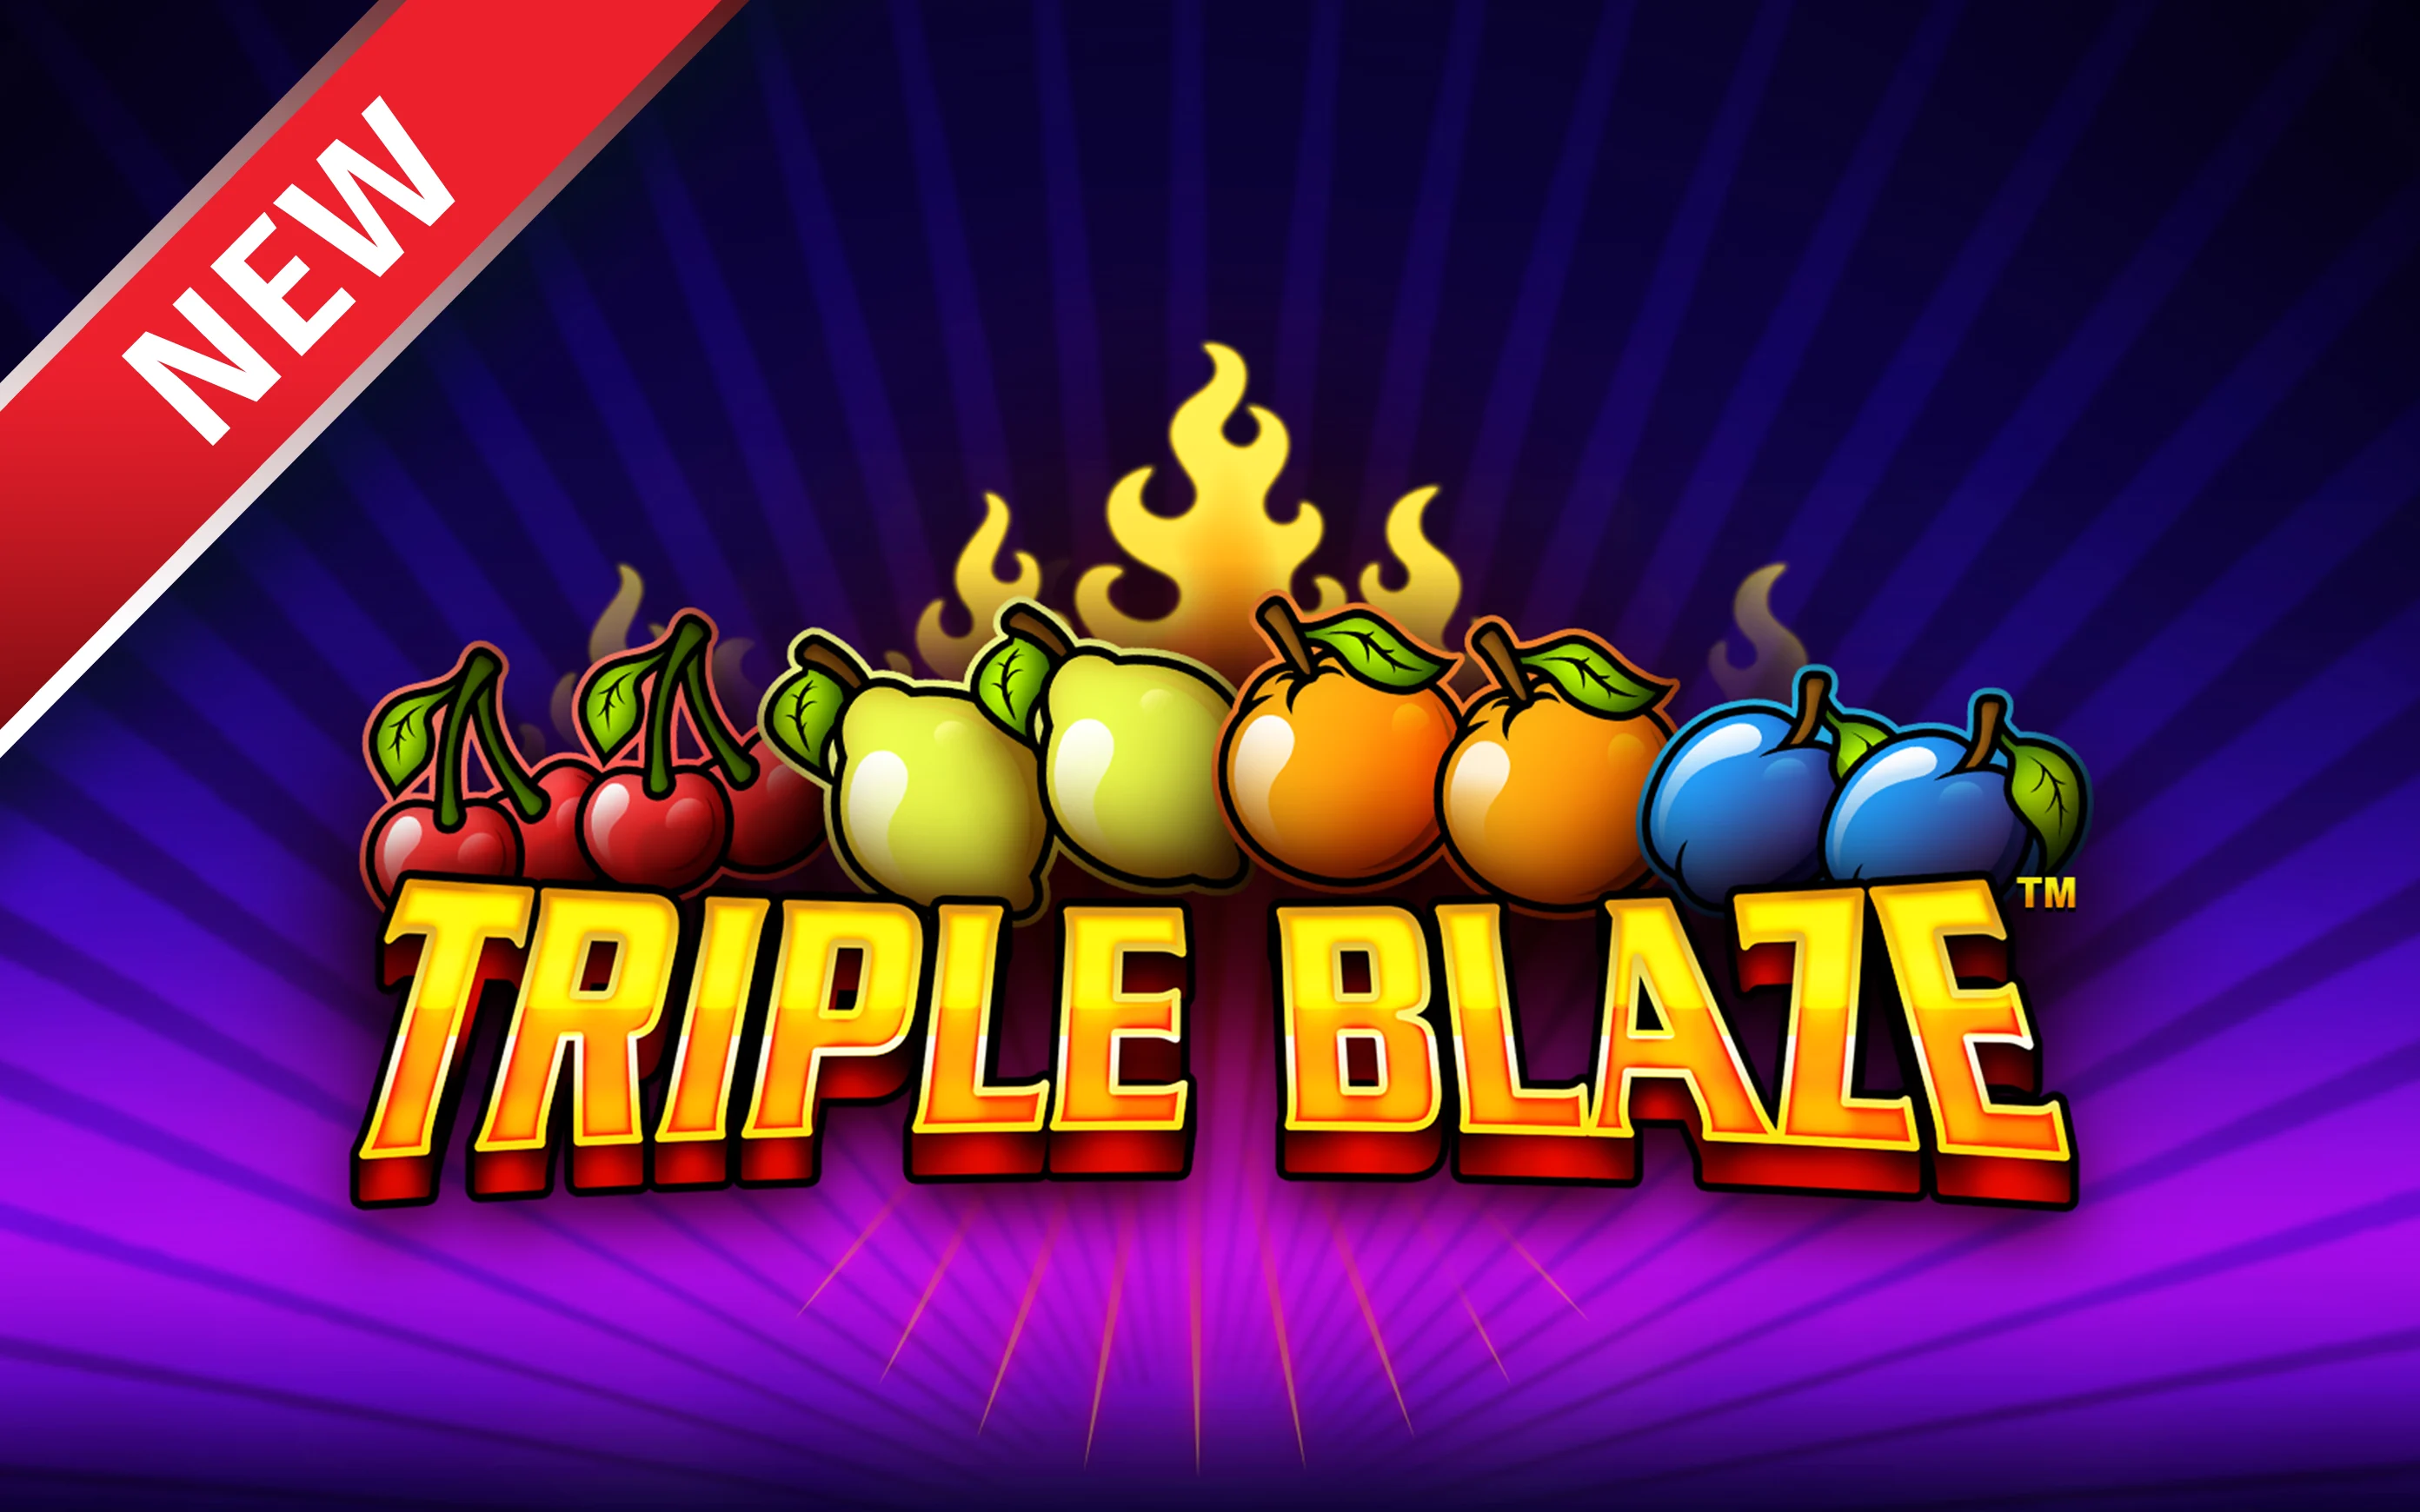 Play Triple Blaze on Starcasino.be online casino